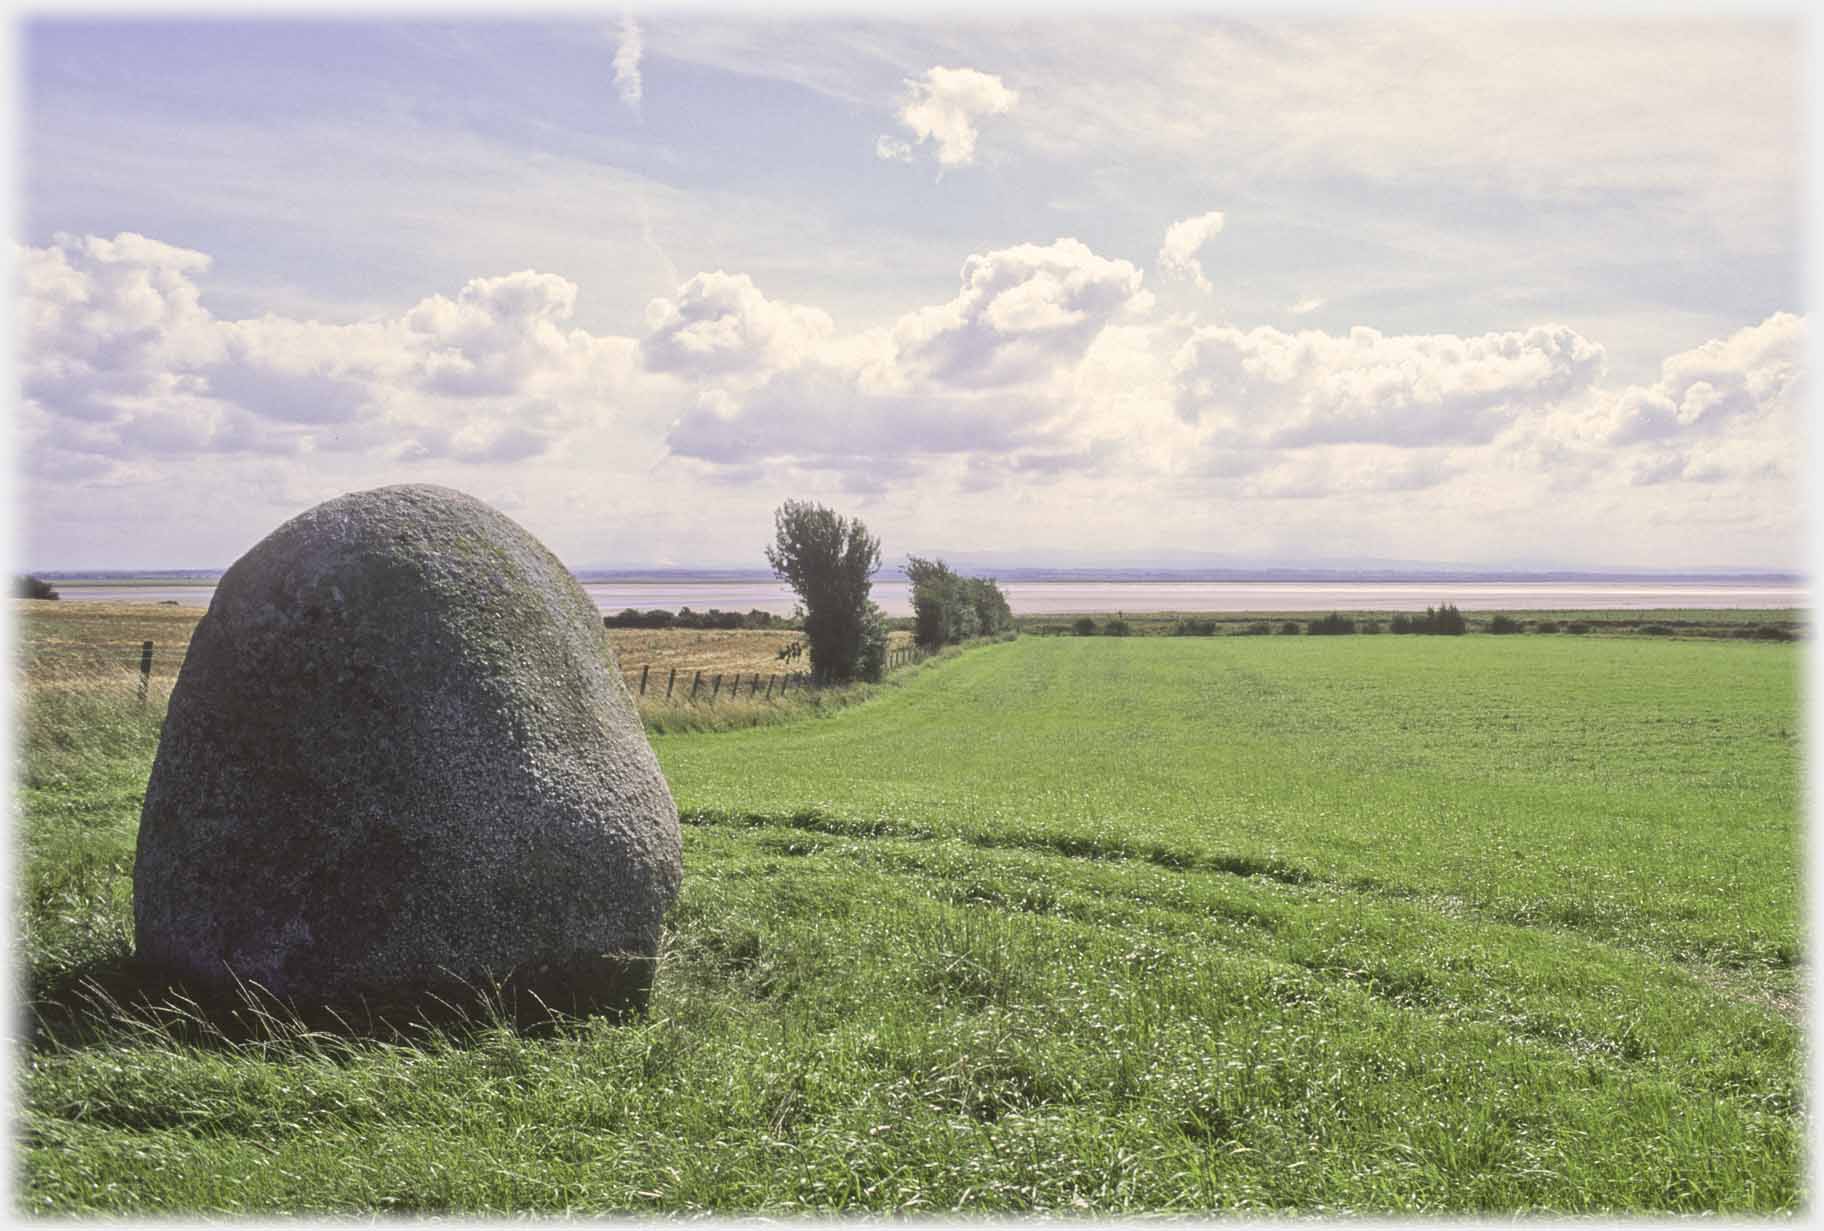 Single boulder in field leading down to sea.